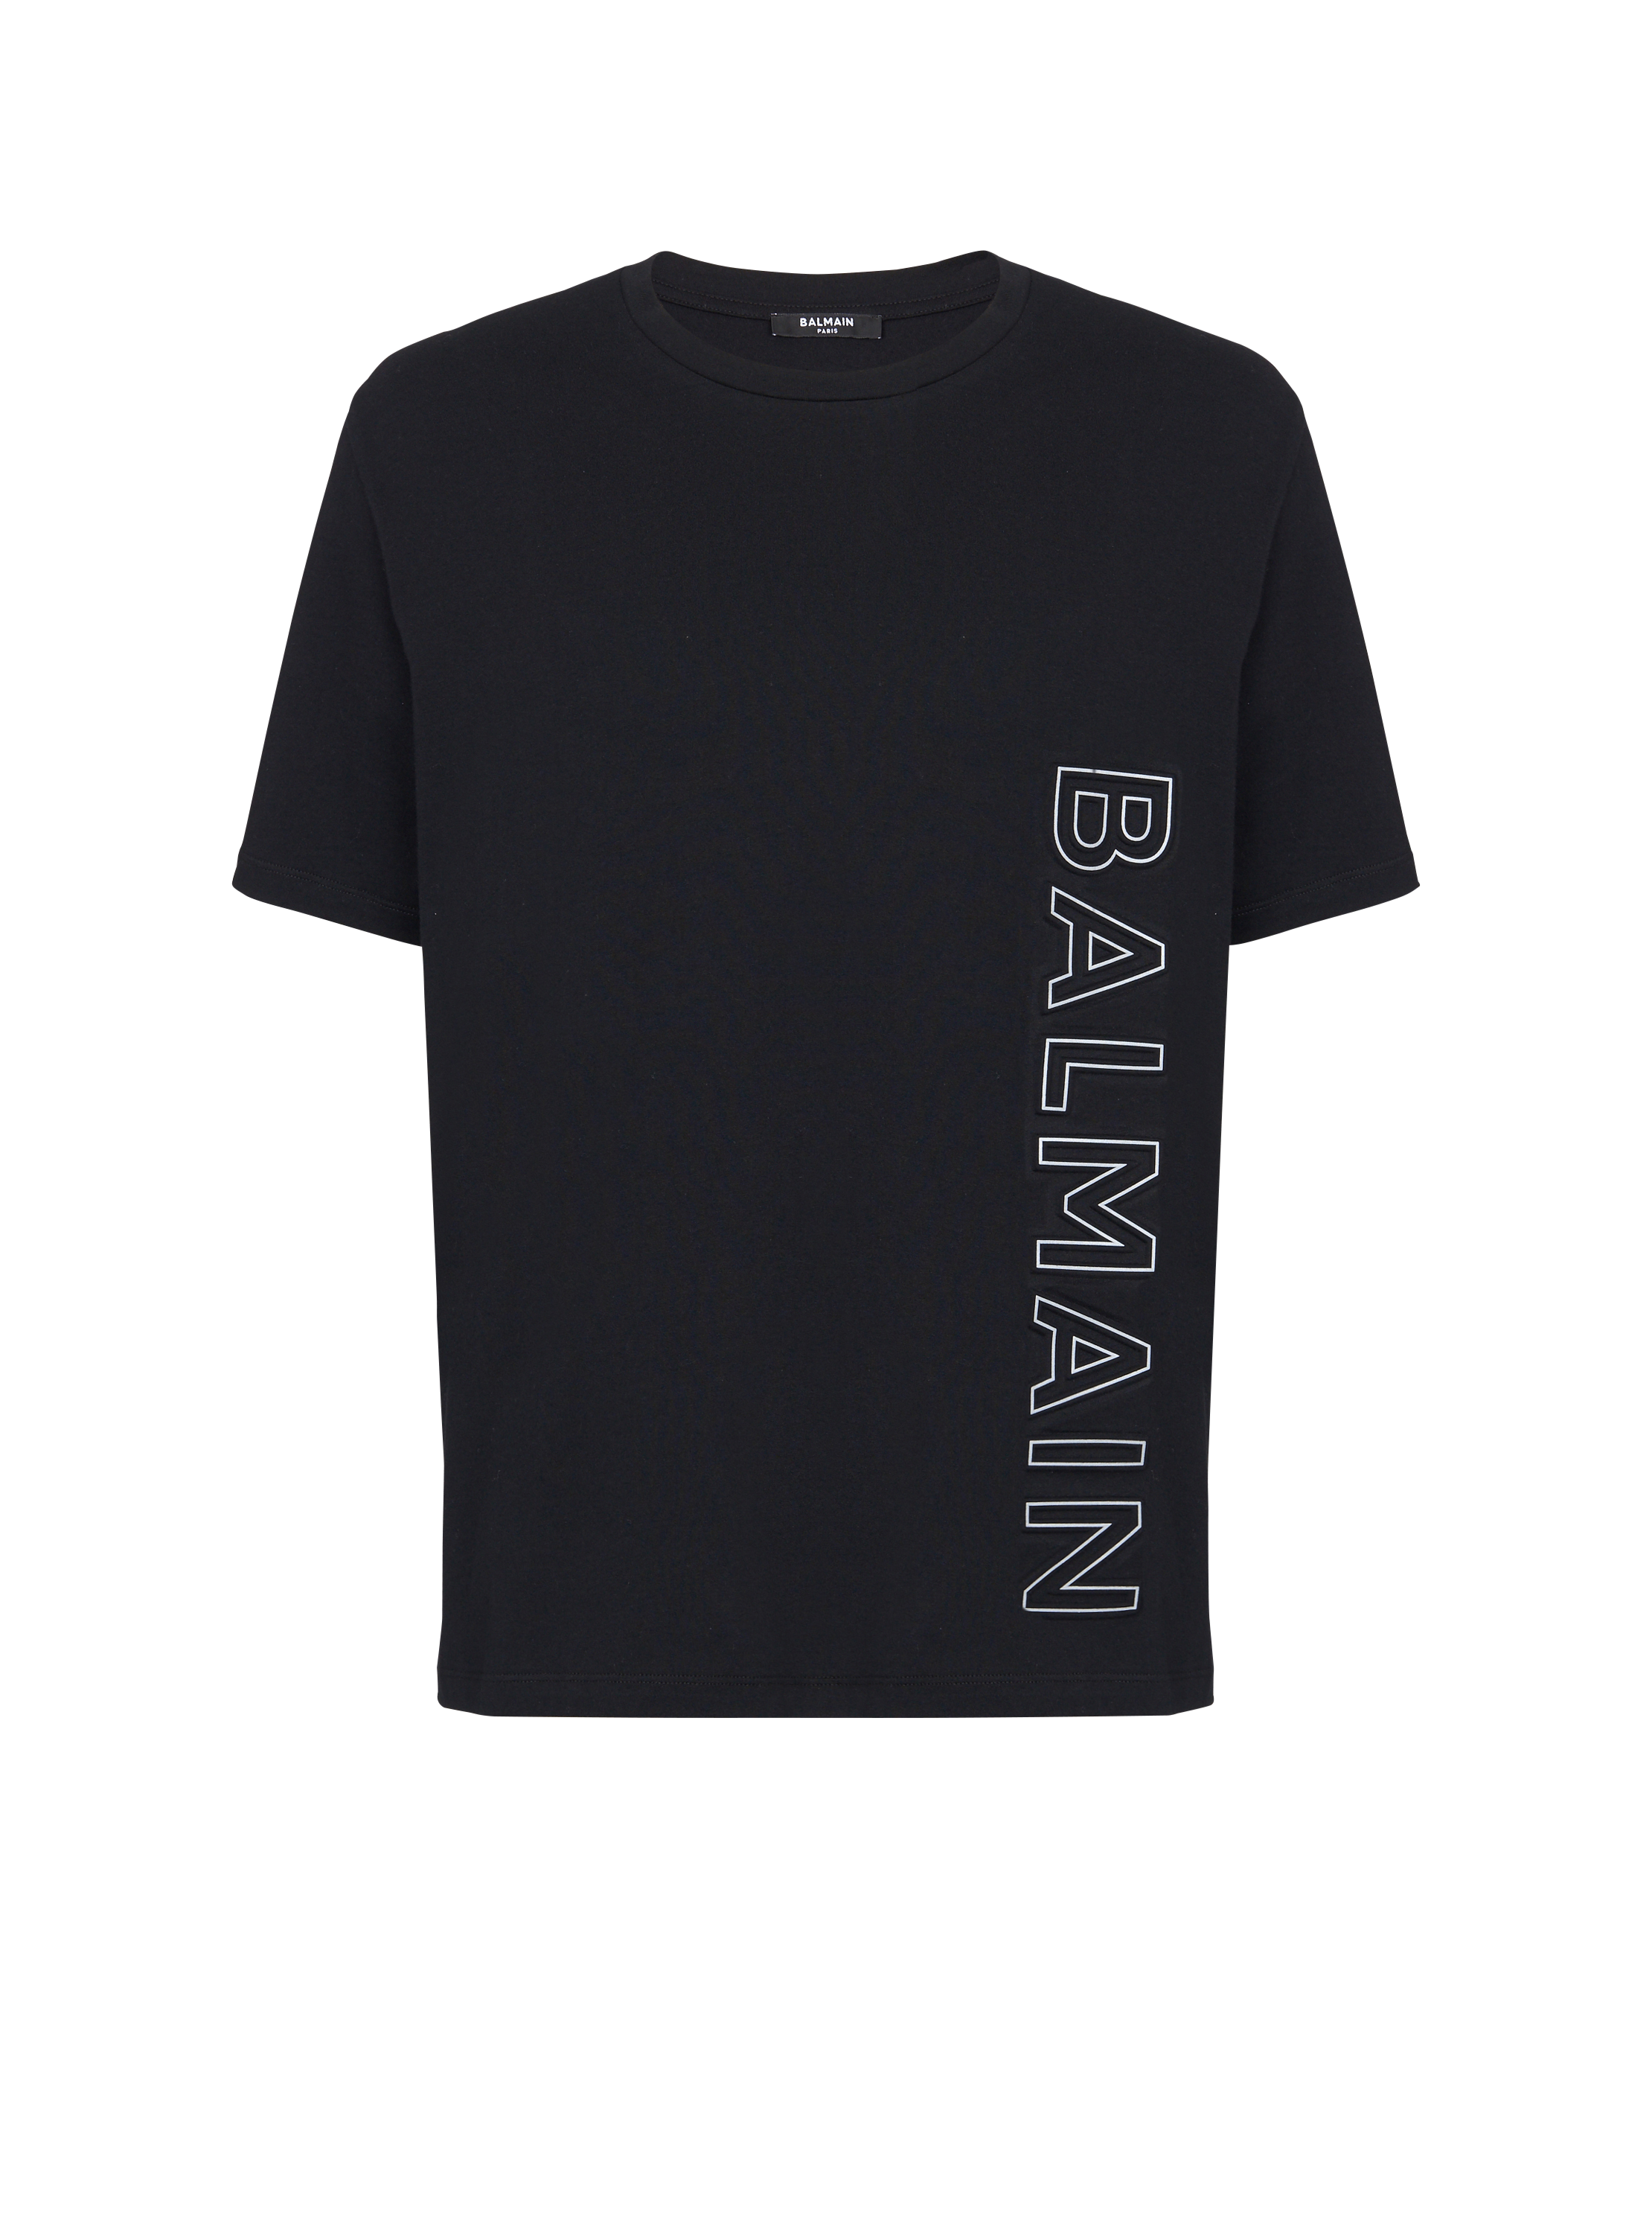 T-shirt Balmain embossé, noir, hi-res